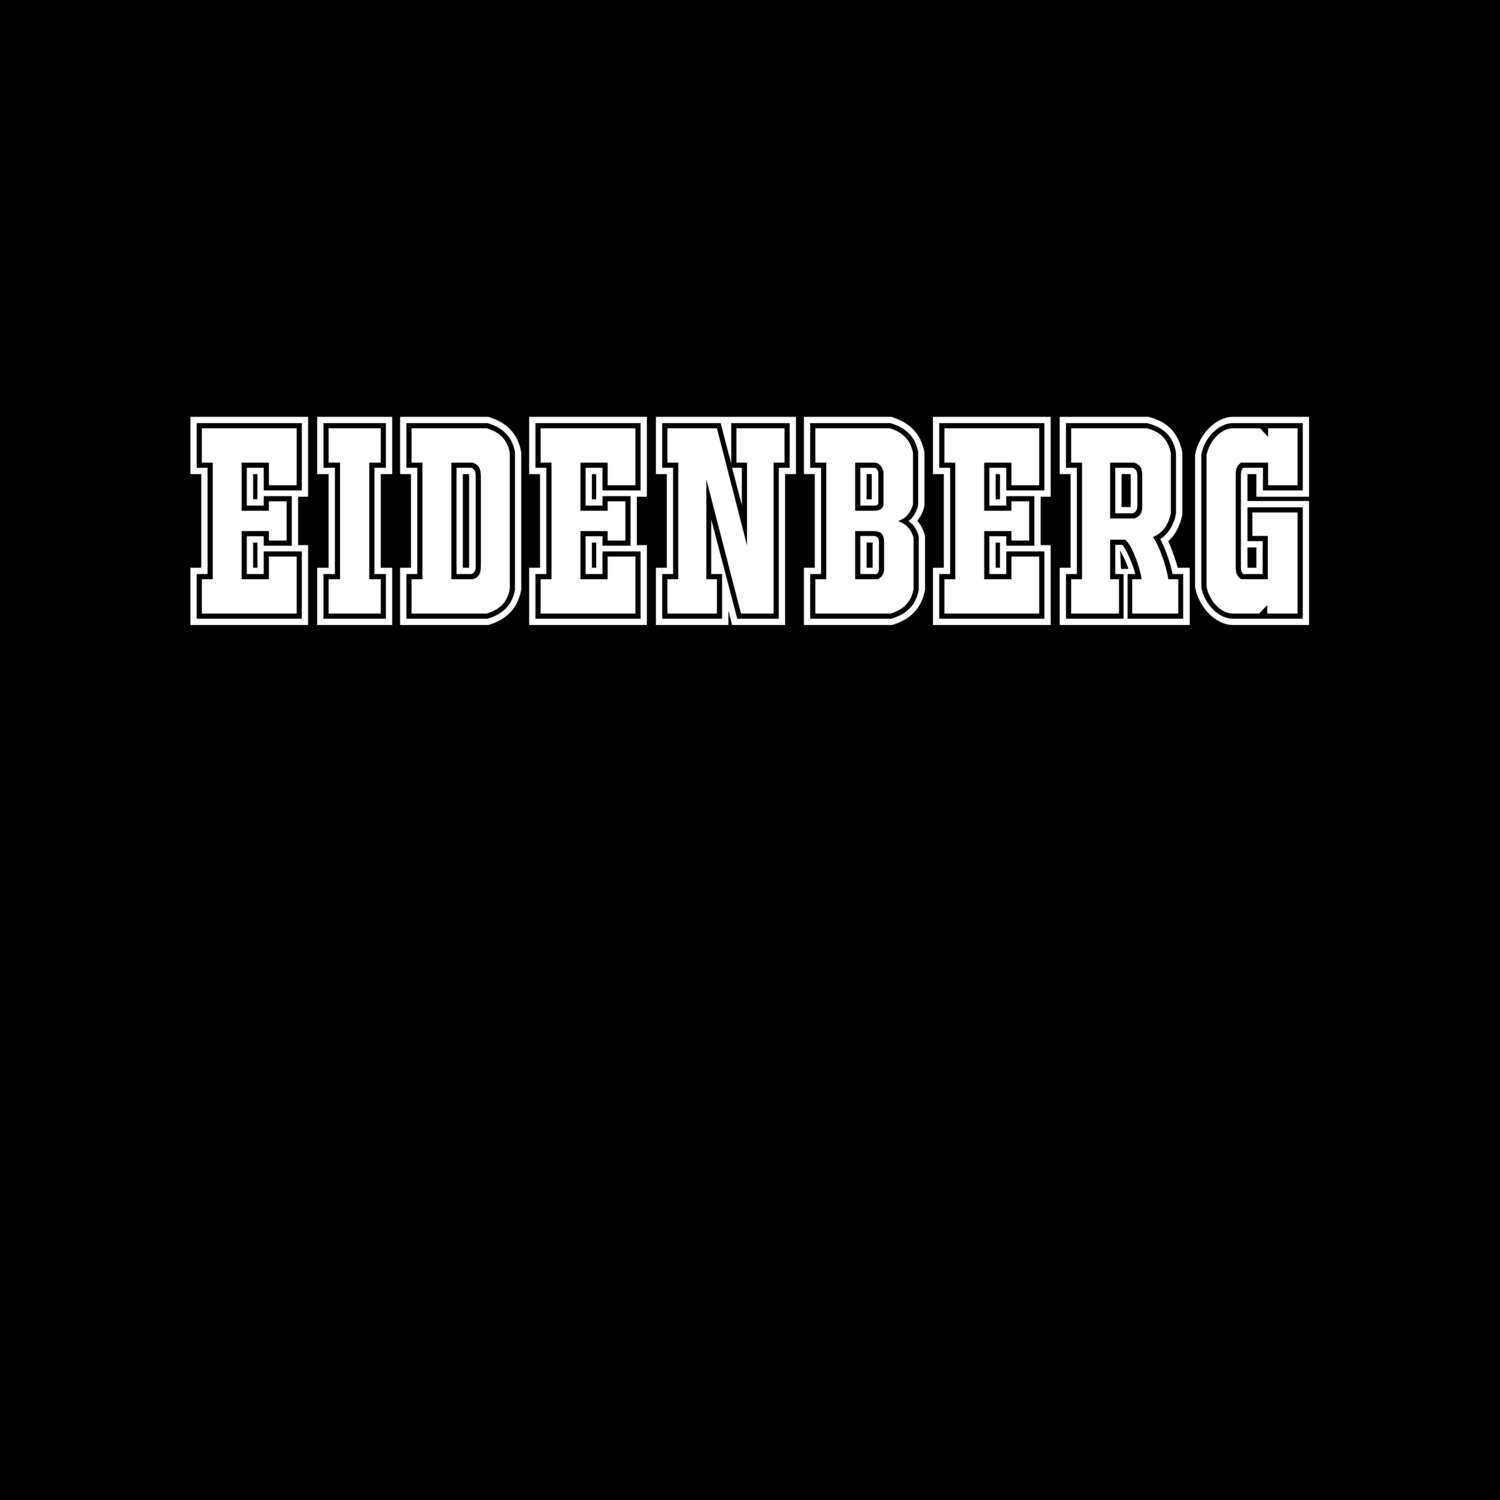 Eidenberg T-Shirt »Classic«